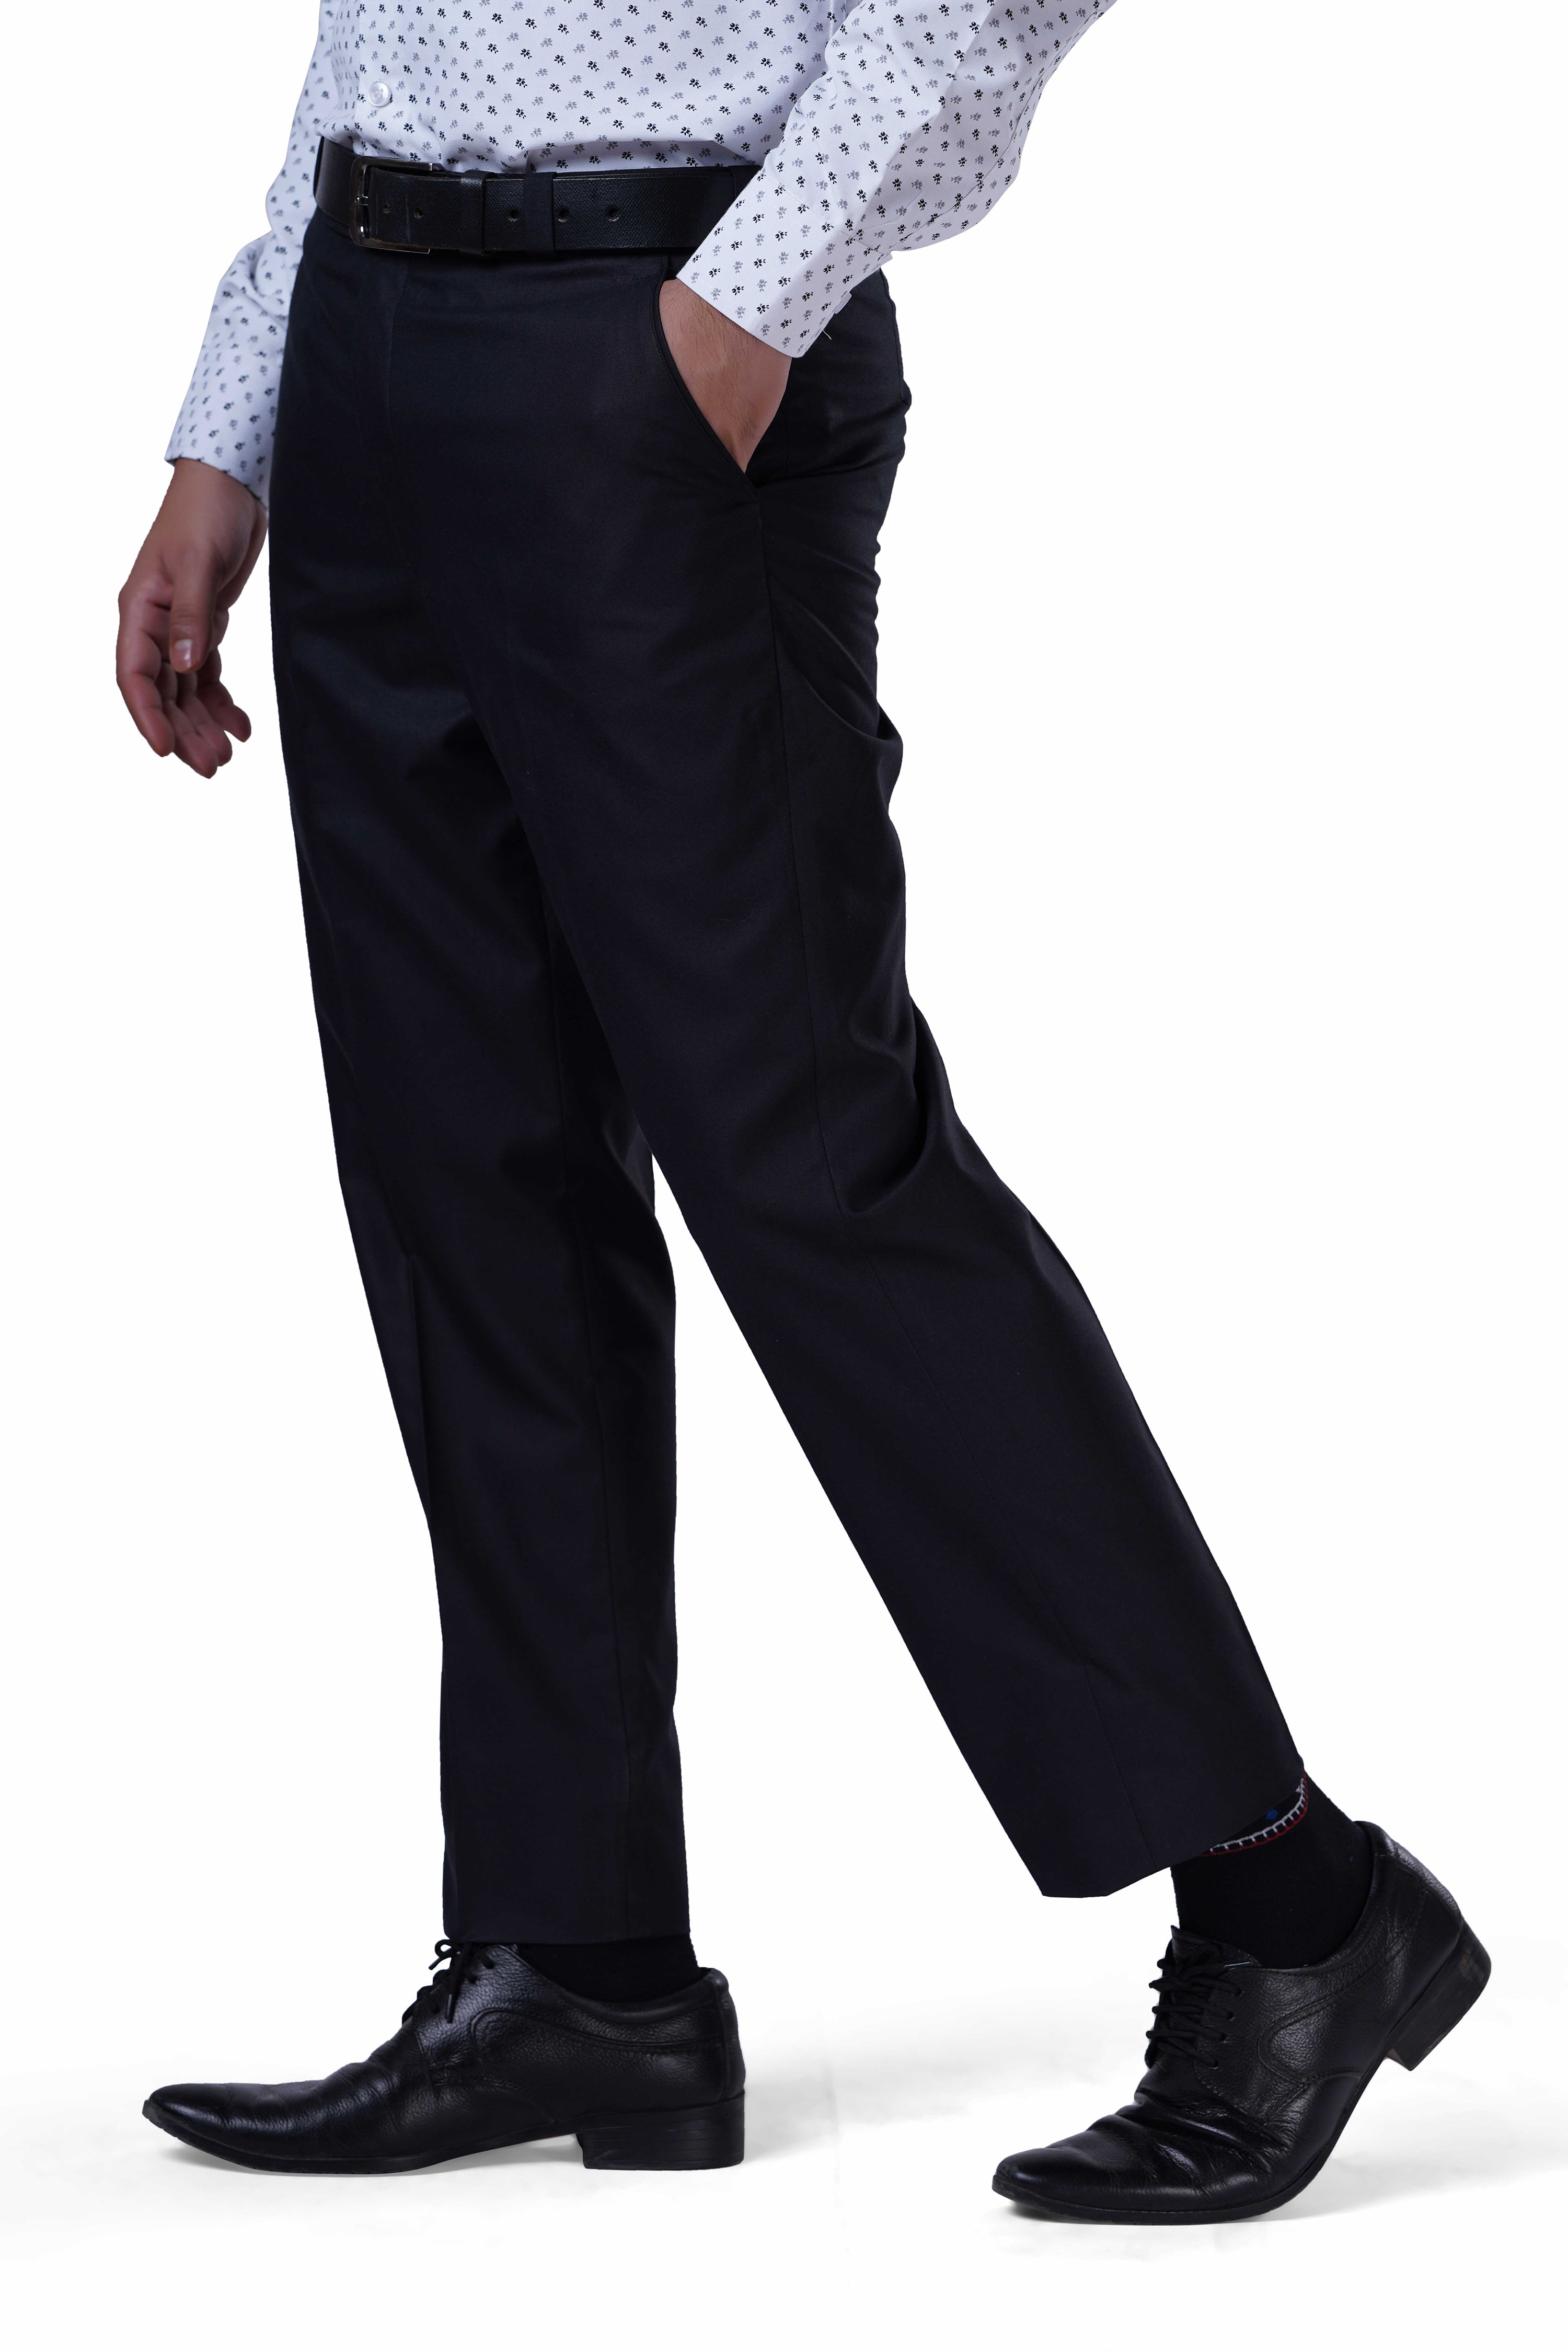 Buy Haul Chic Men's Polyster Blend Self Design Slim Fit Formal Trouser  Black at Amazon.in